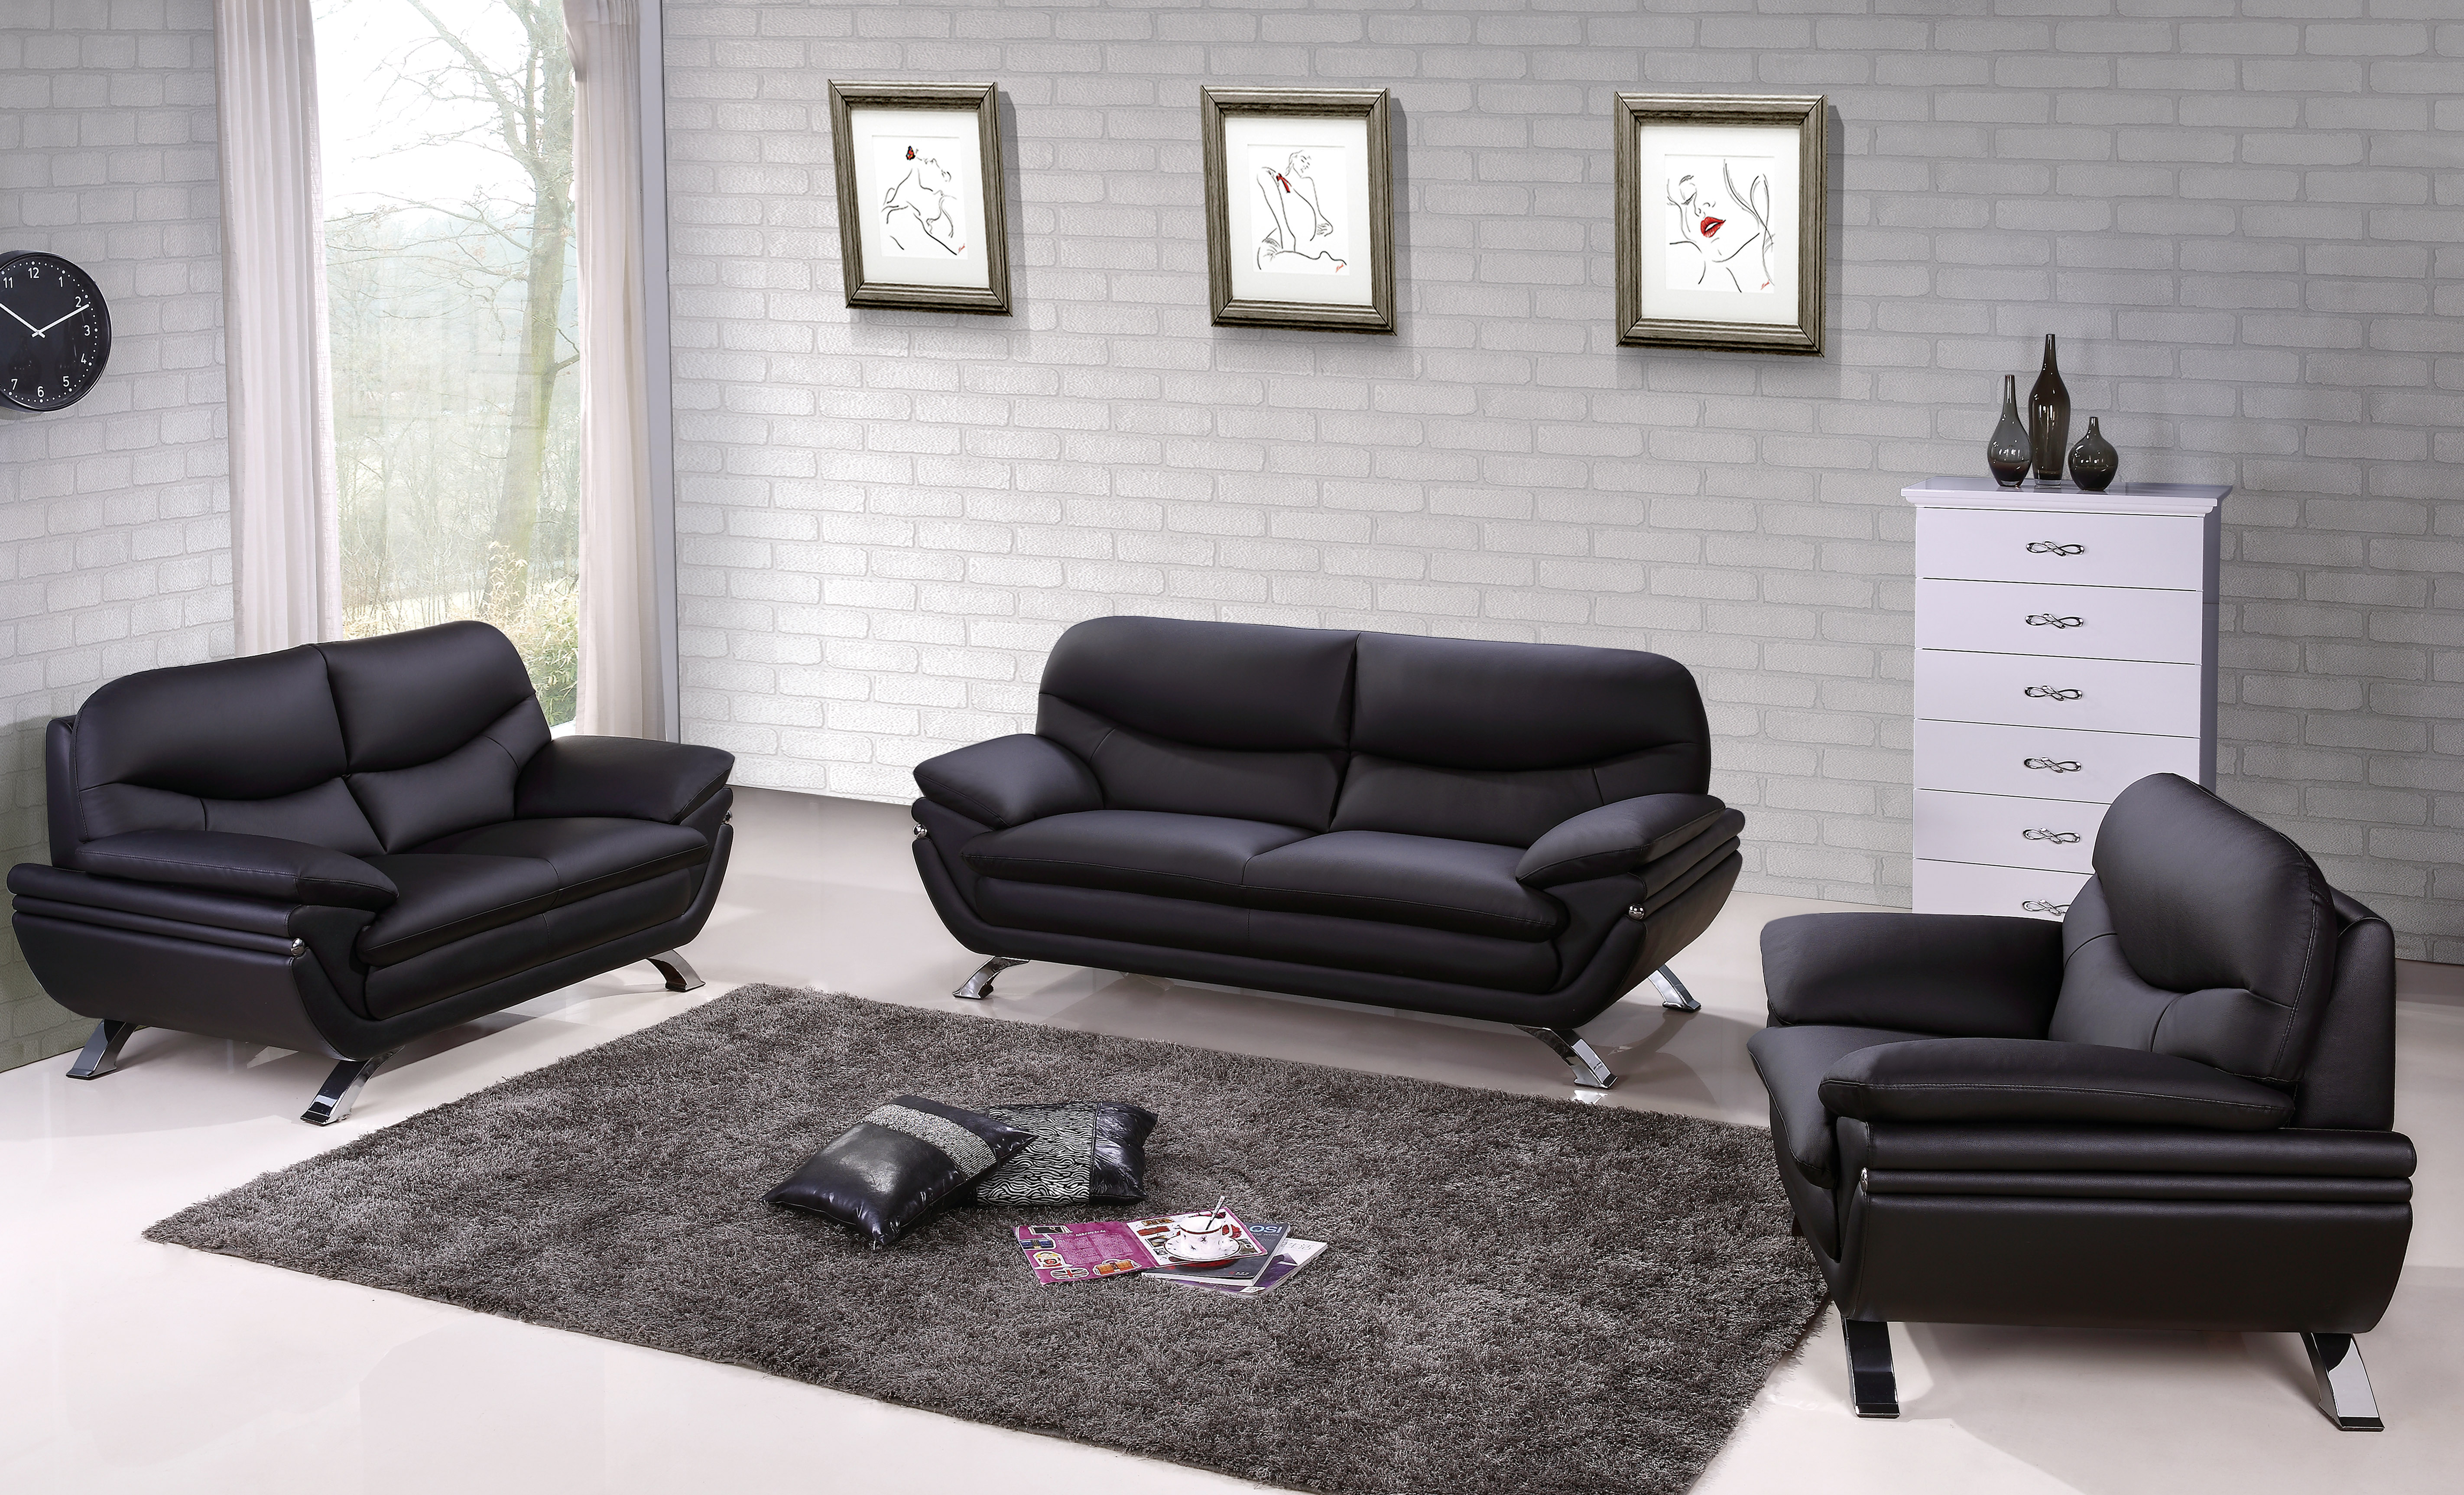 Modern Leather Sofa Set Designs For Living Room : Shaped Sofa Living ...